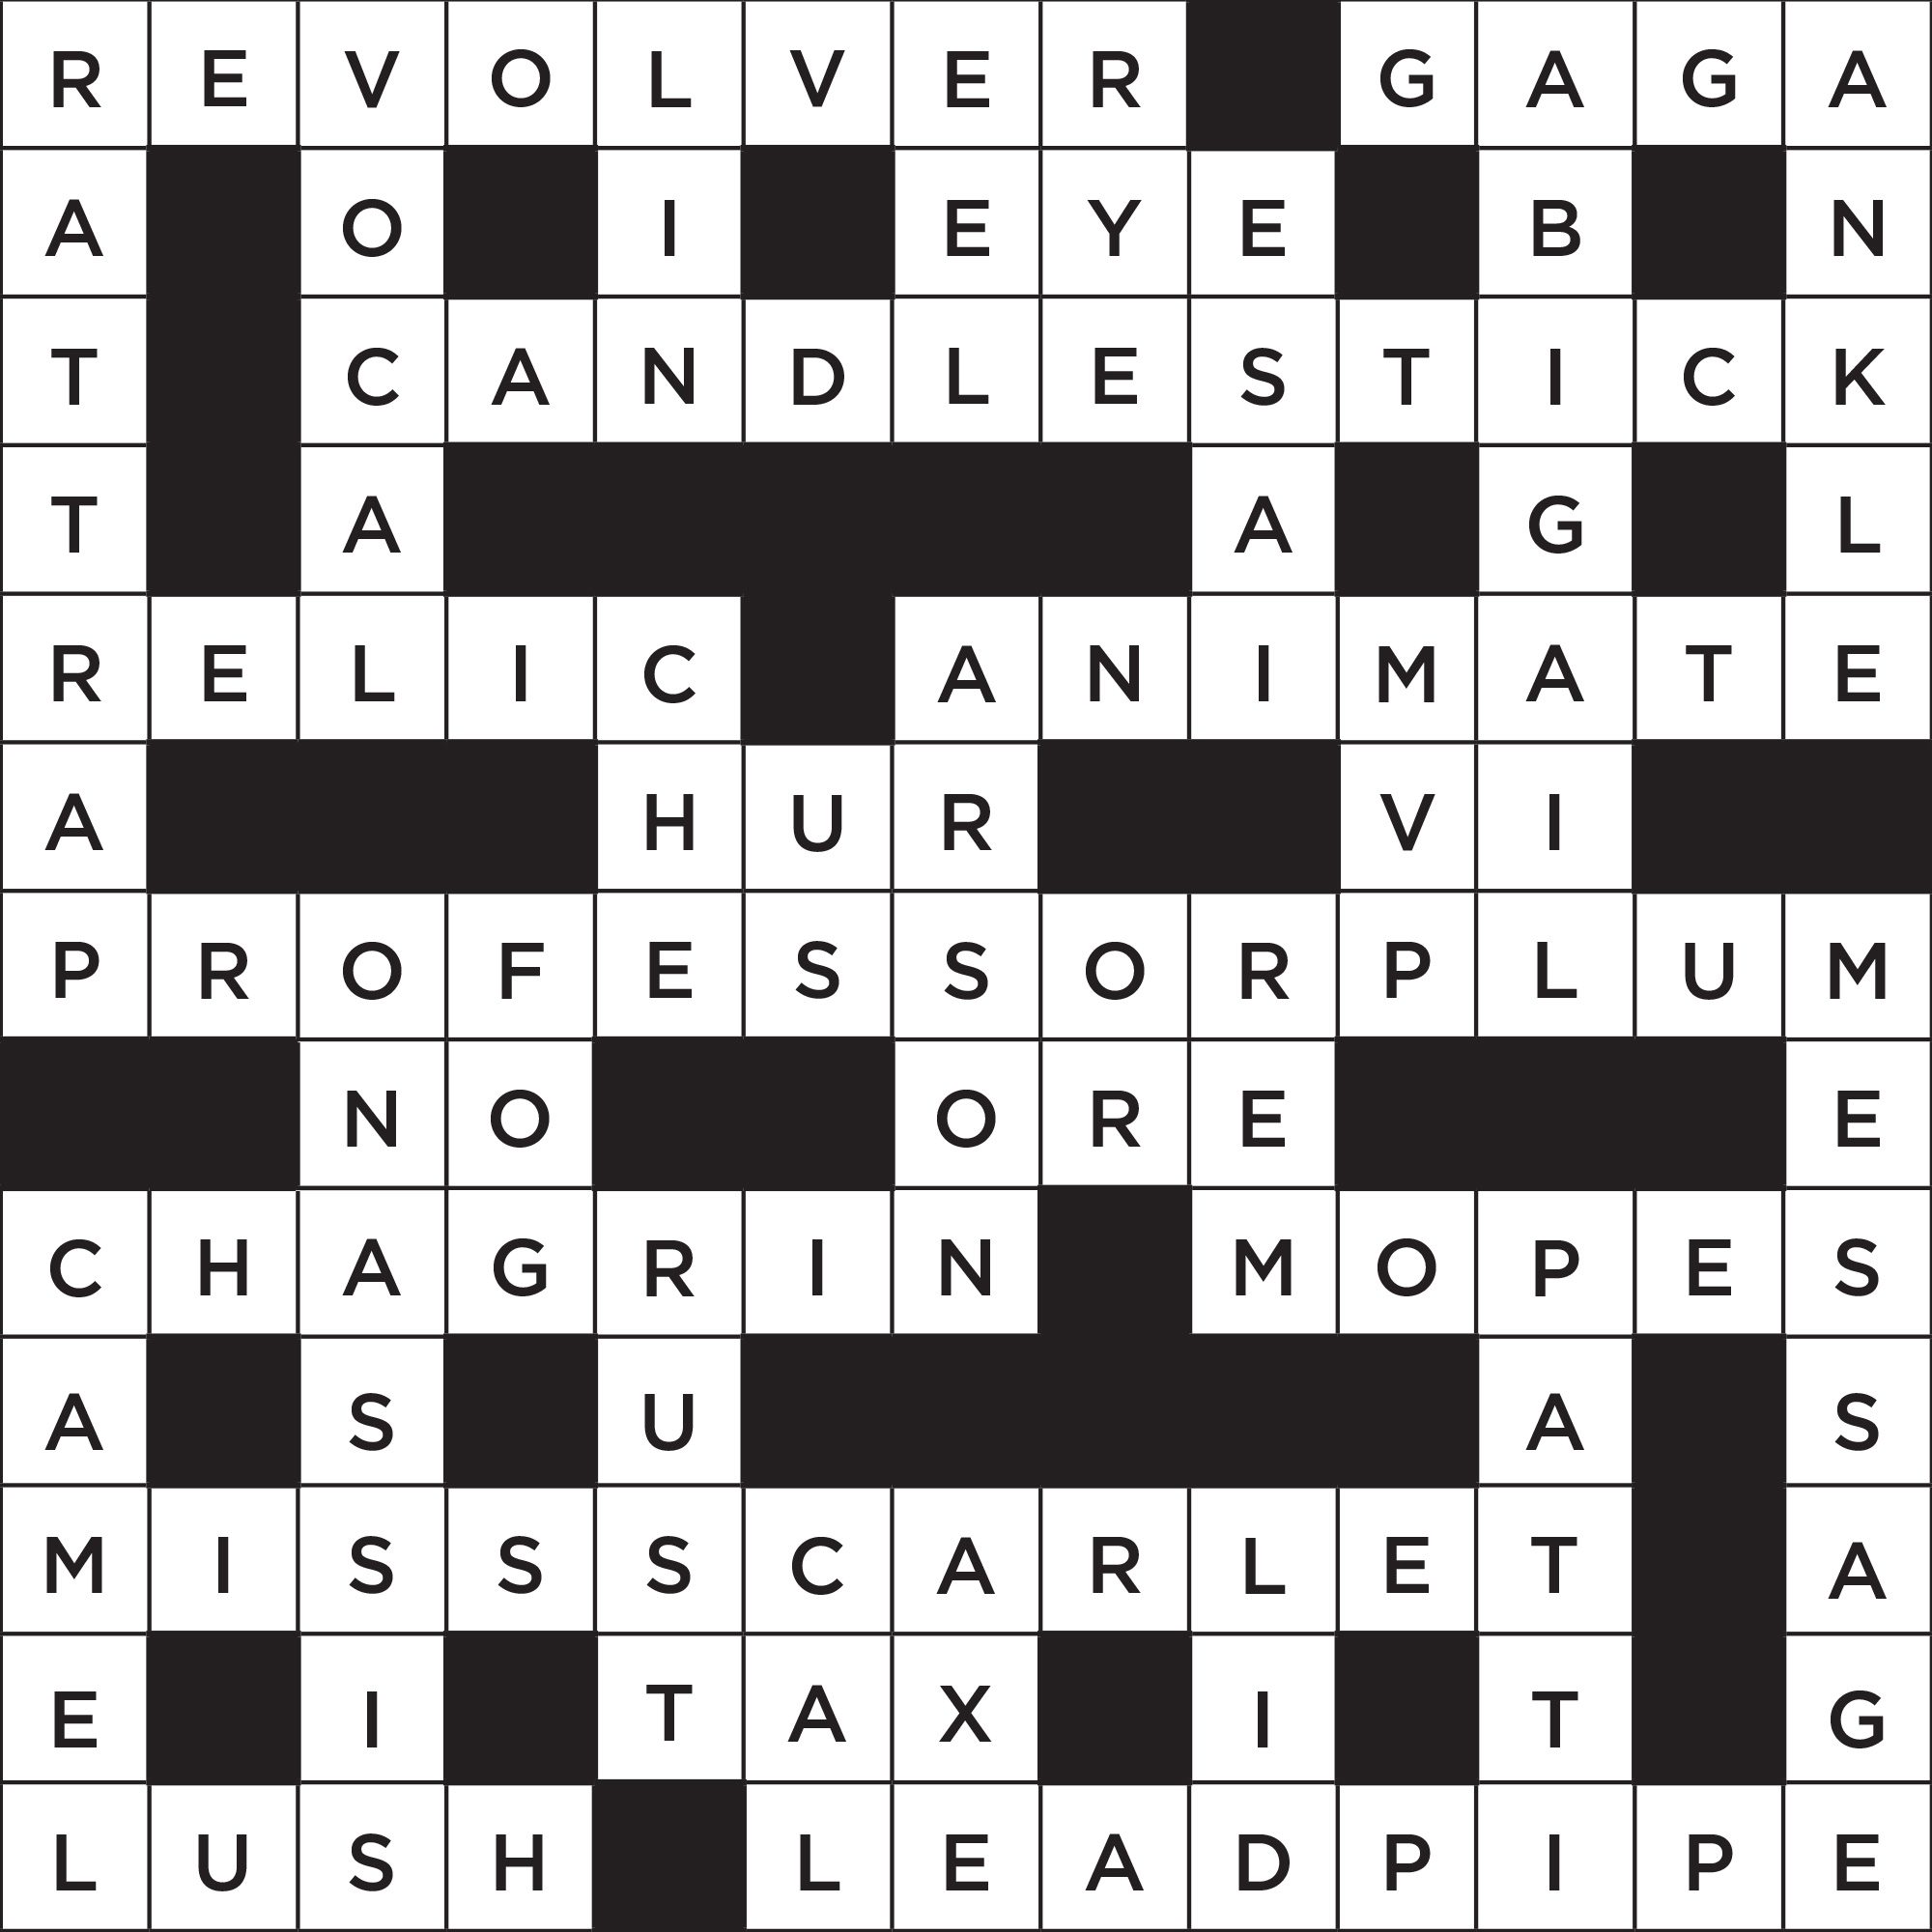 clue theme crossword answer